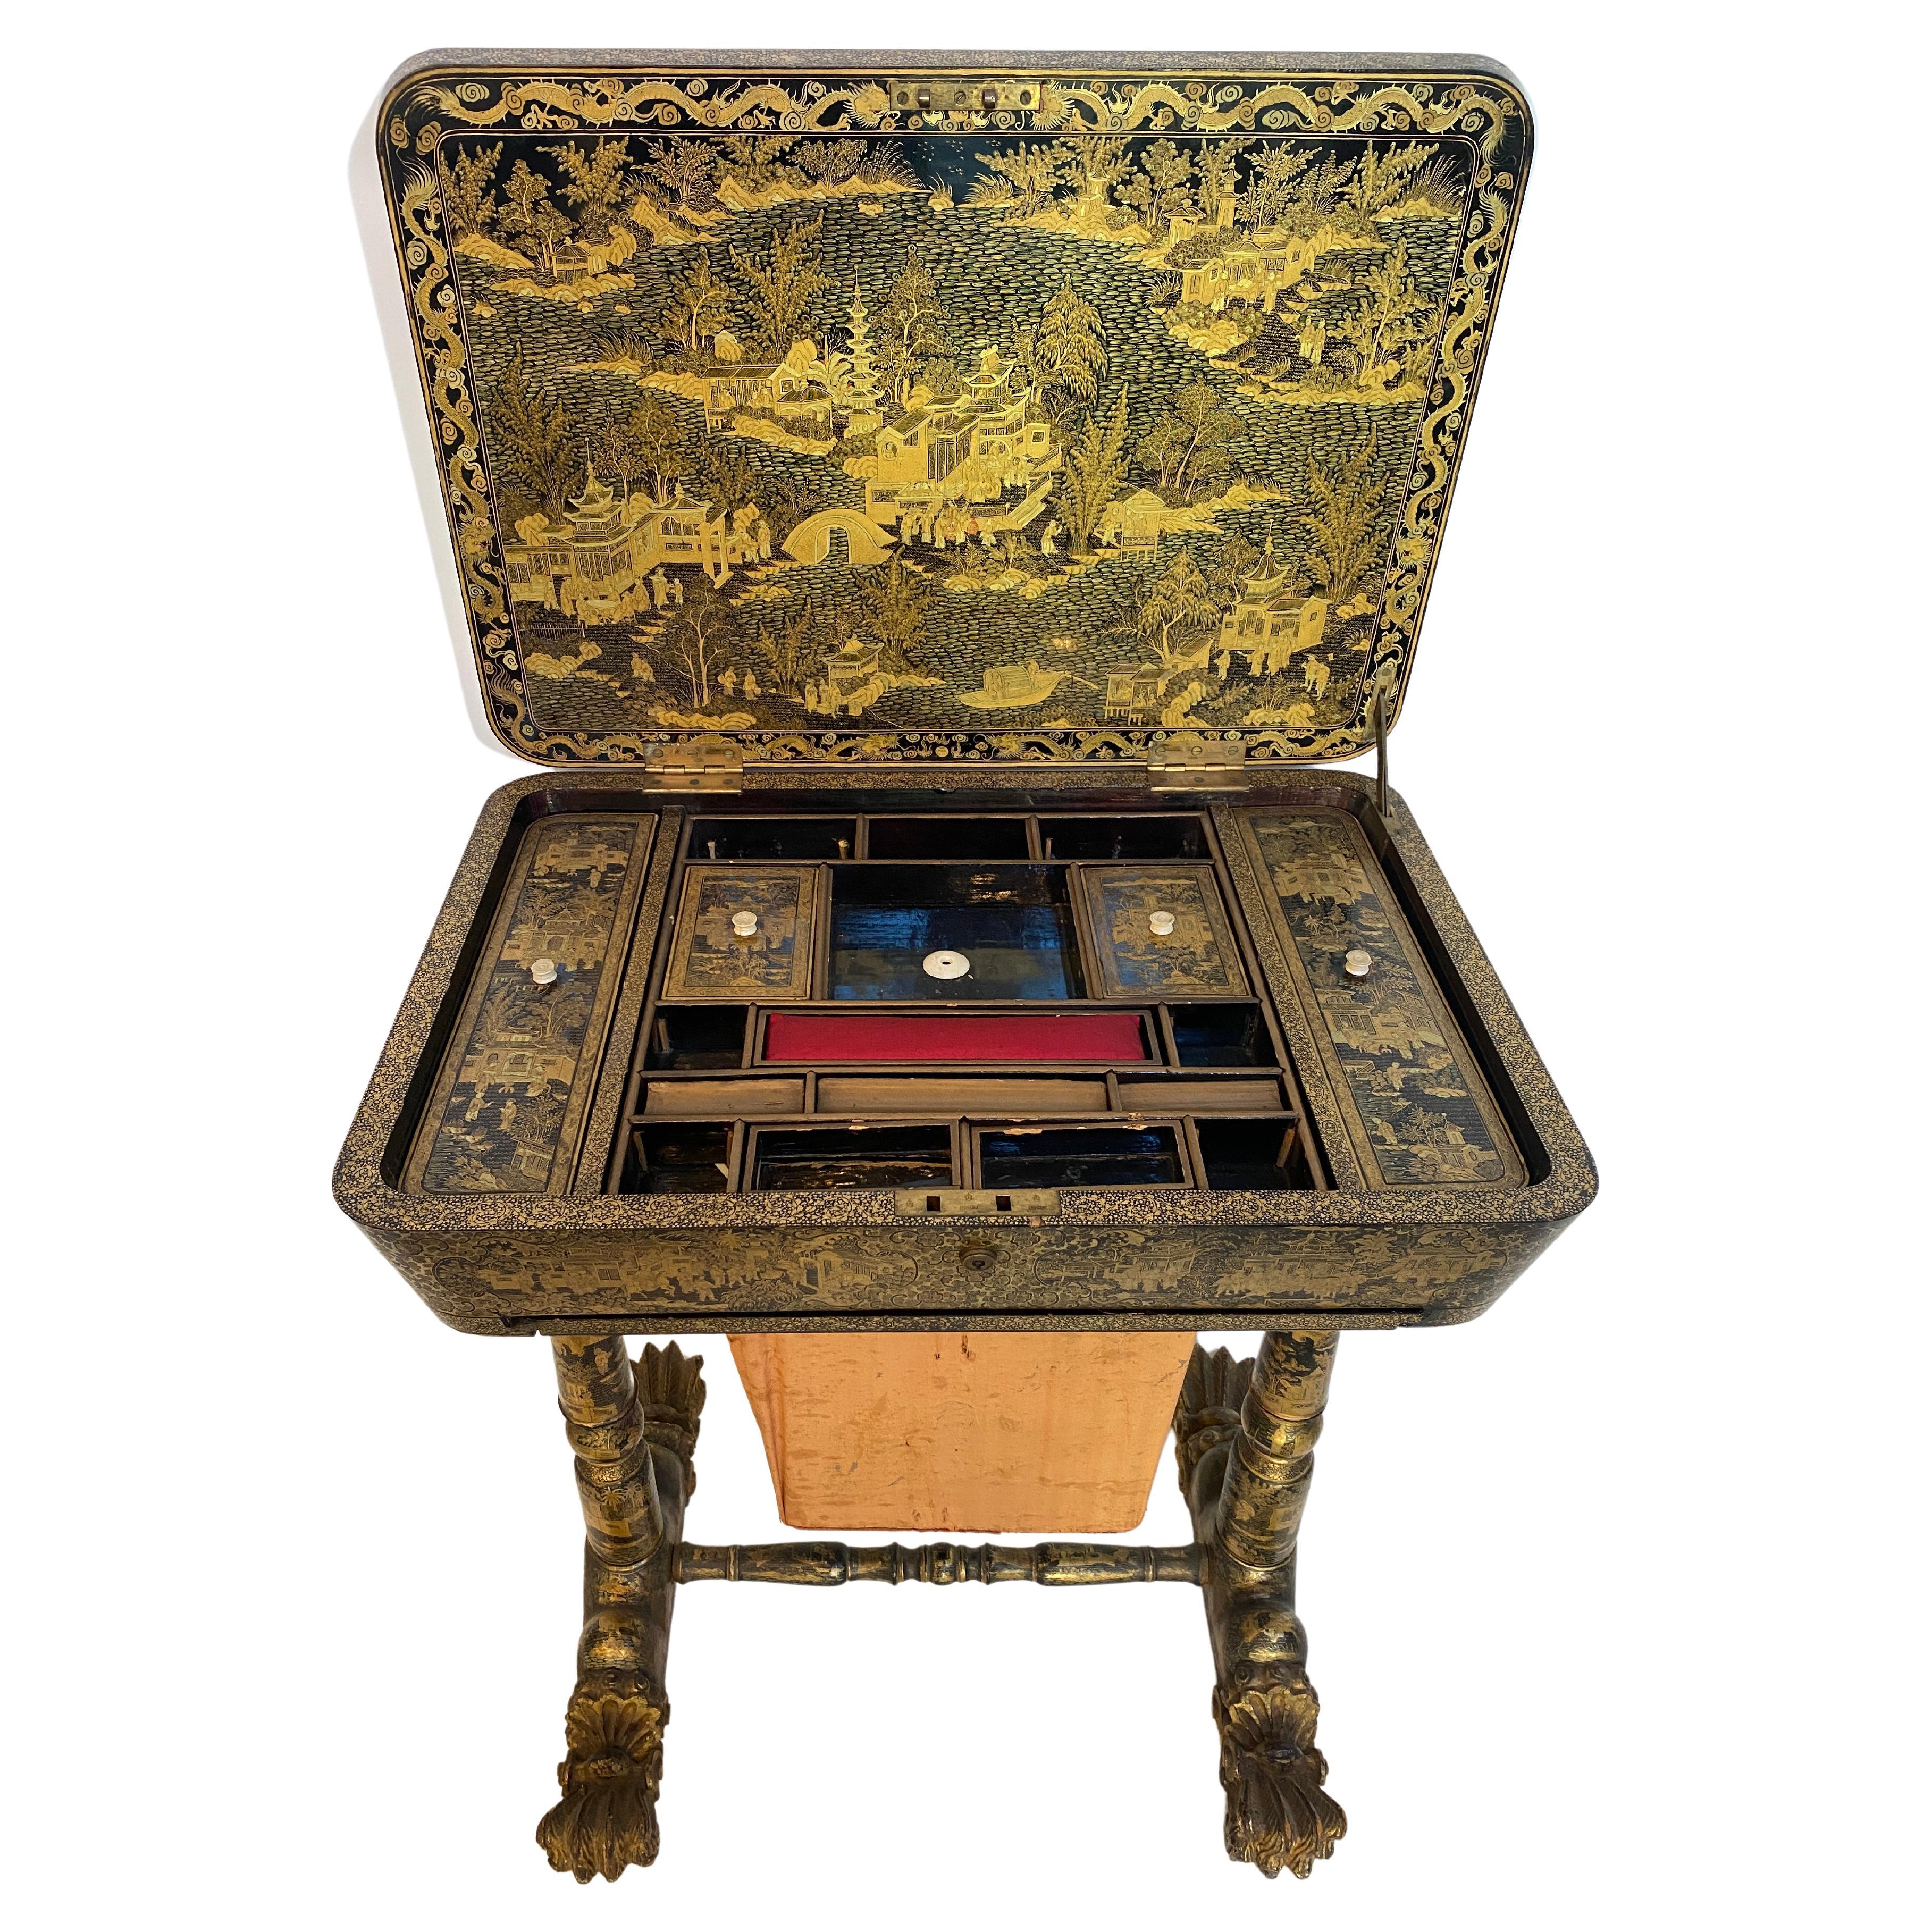 Antigua mesa de coser china del siglo XIX con laca dorada